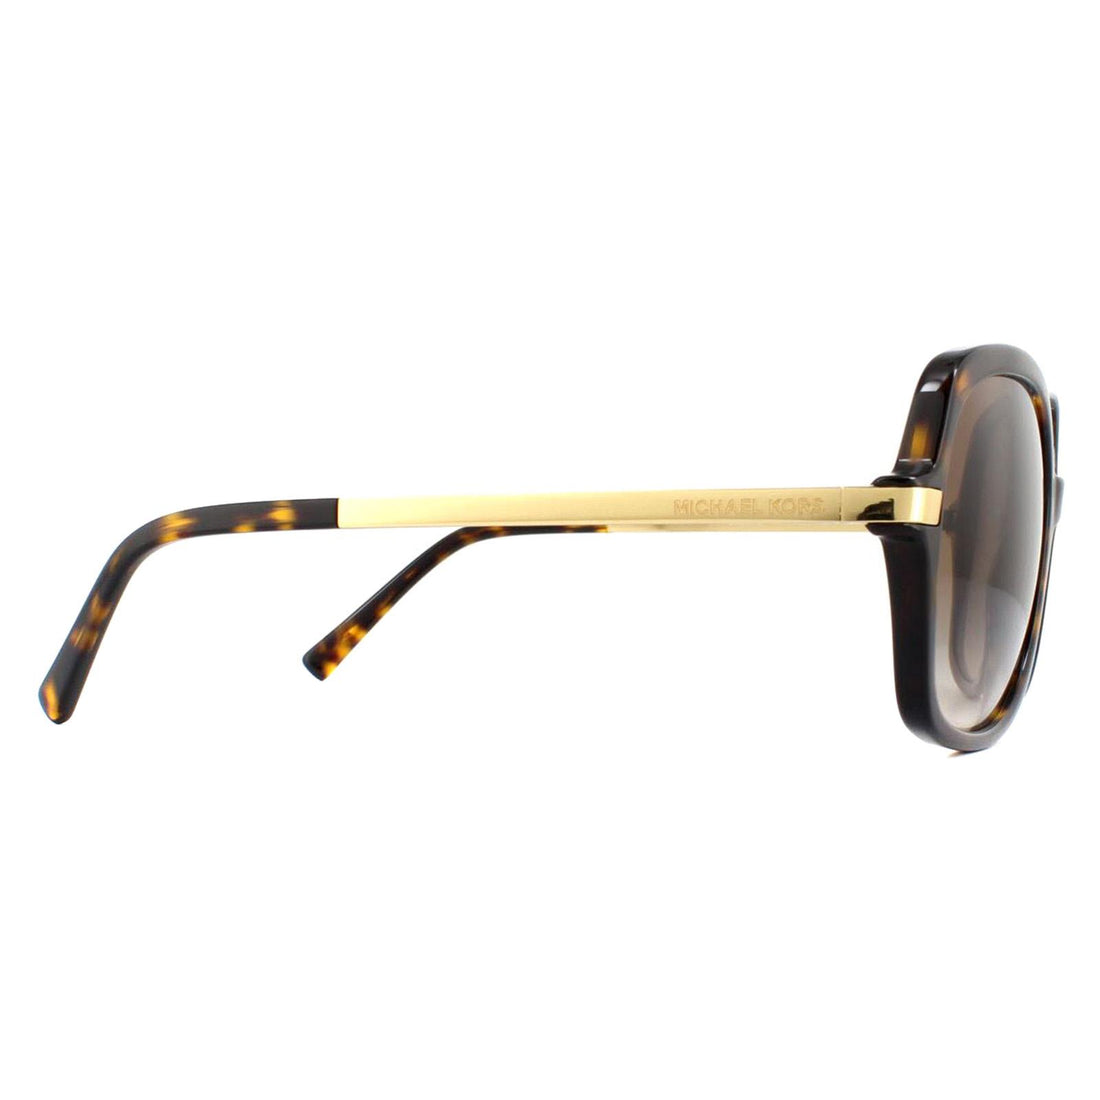 Michael Kors Sunglasses Adrianna II 2024 310613 Dark Tortoise Gold Brown Gradient